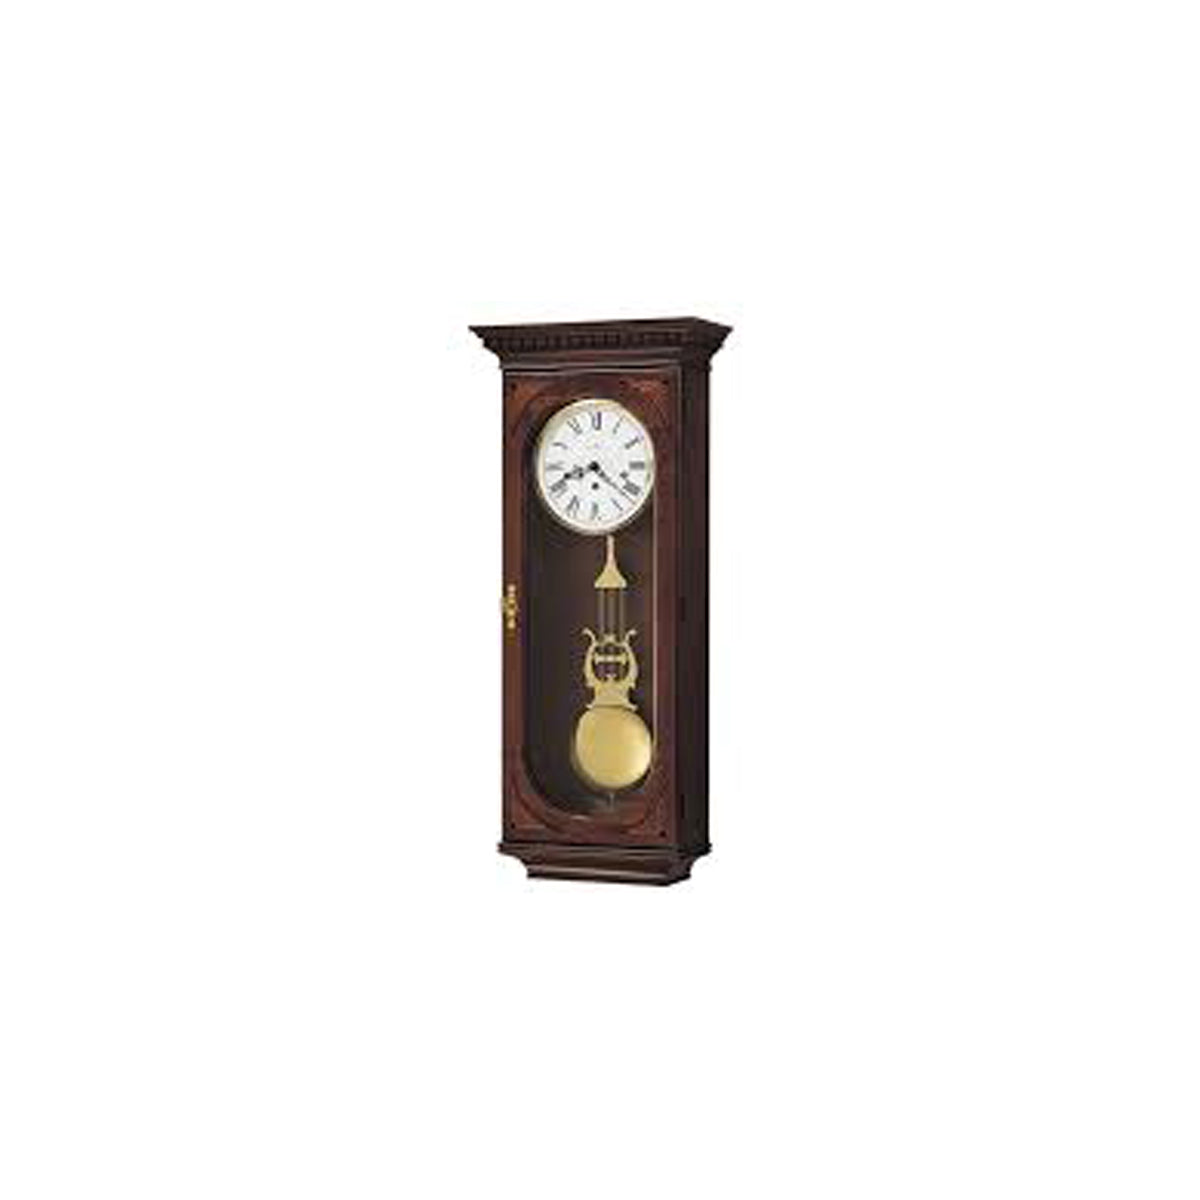 Howard Miller 612-221 Clocks Jennison Wall Clock